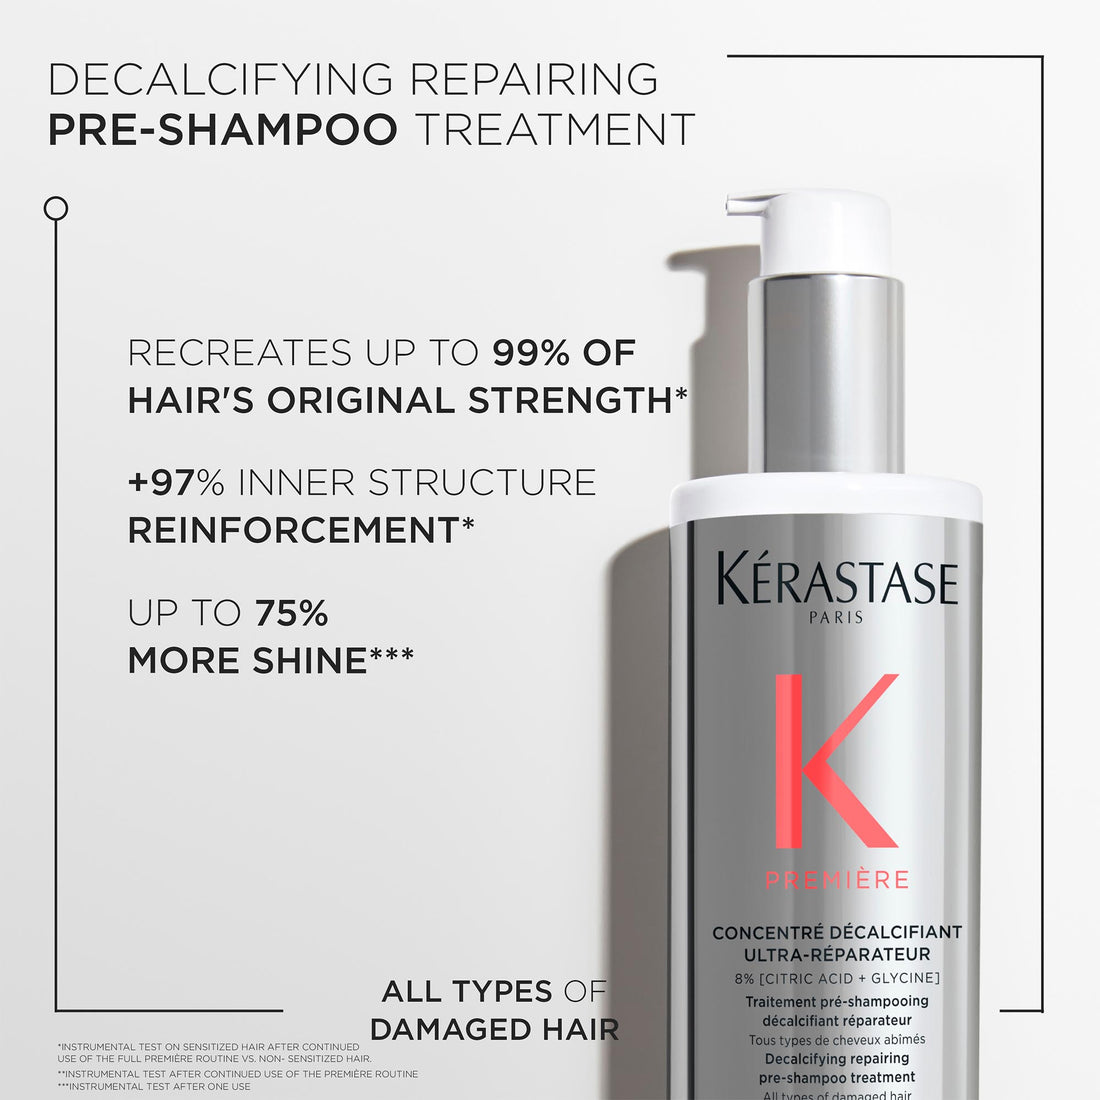 Kérastase Premiére Decalcifying Repairing Pre-Shampoo Treatment 250ml